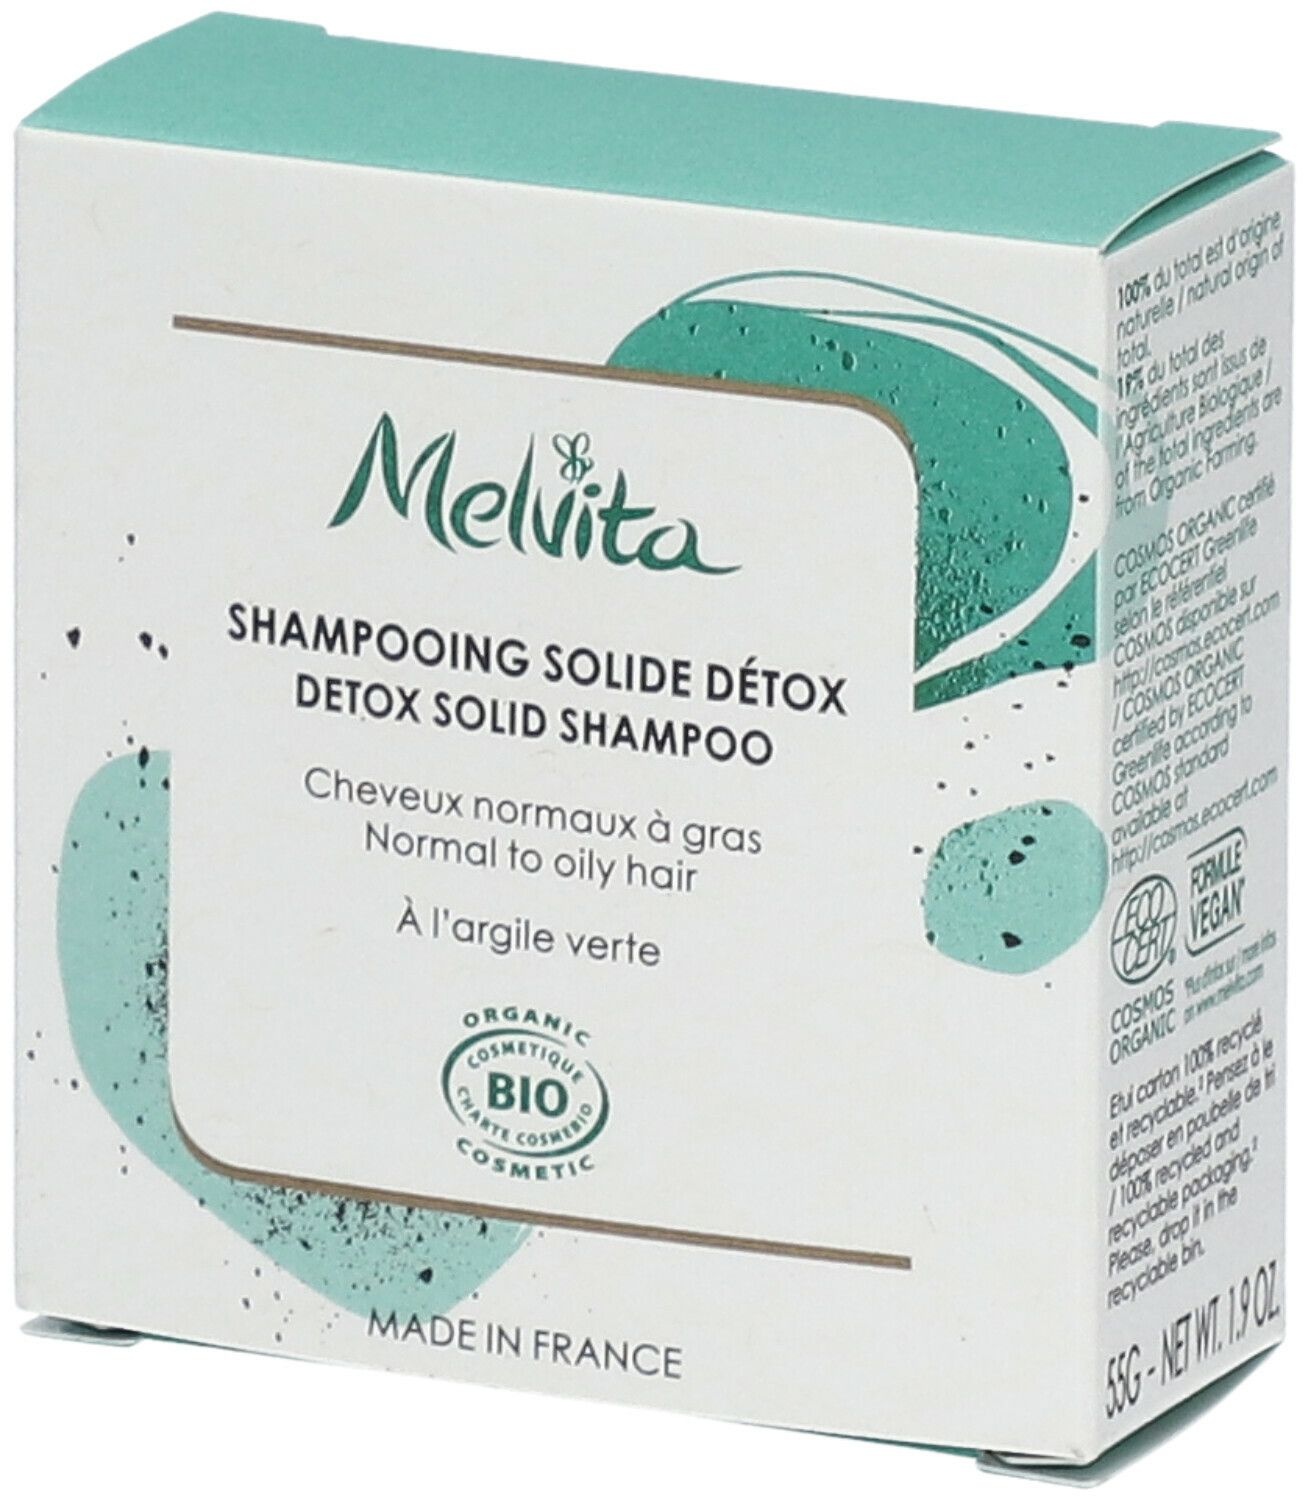 Melvita Shampoing solide detox 55 g shampooing